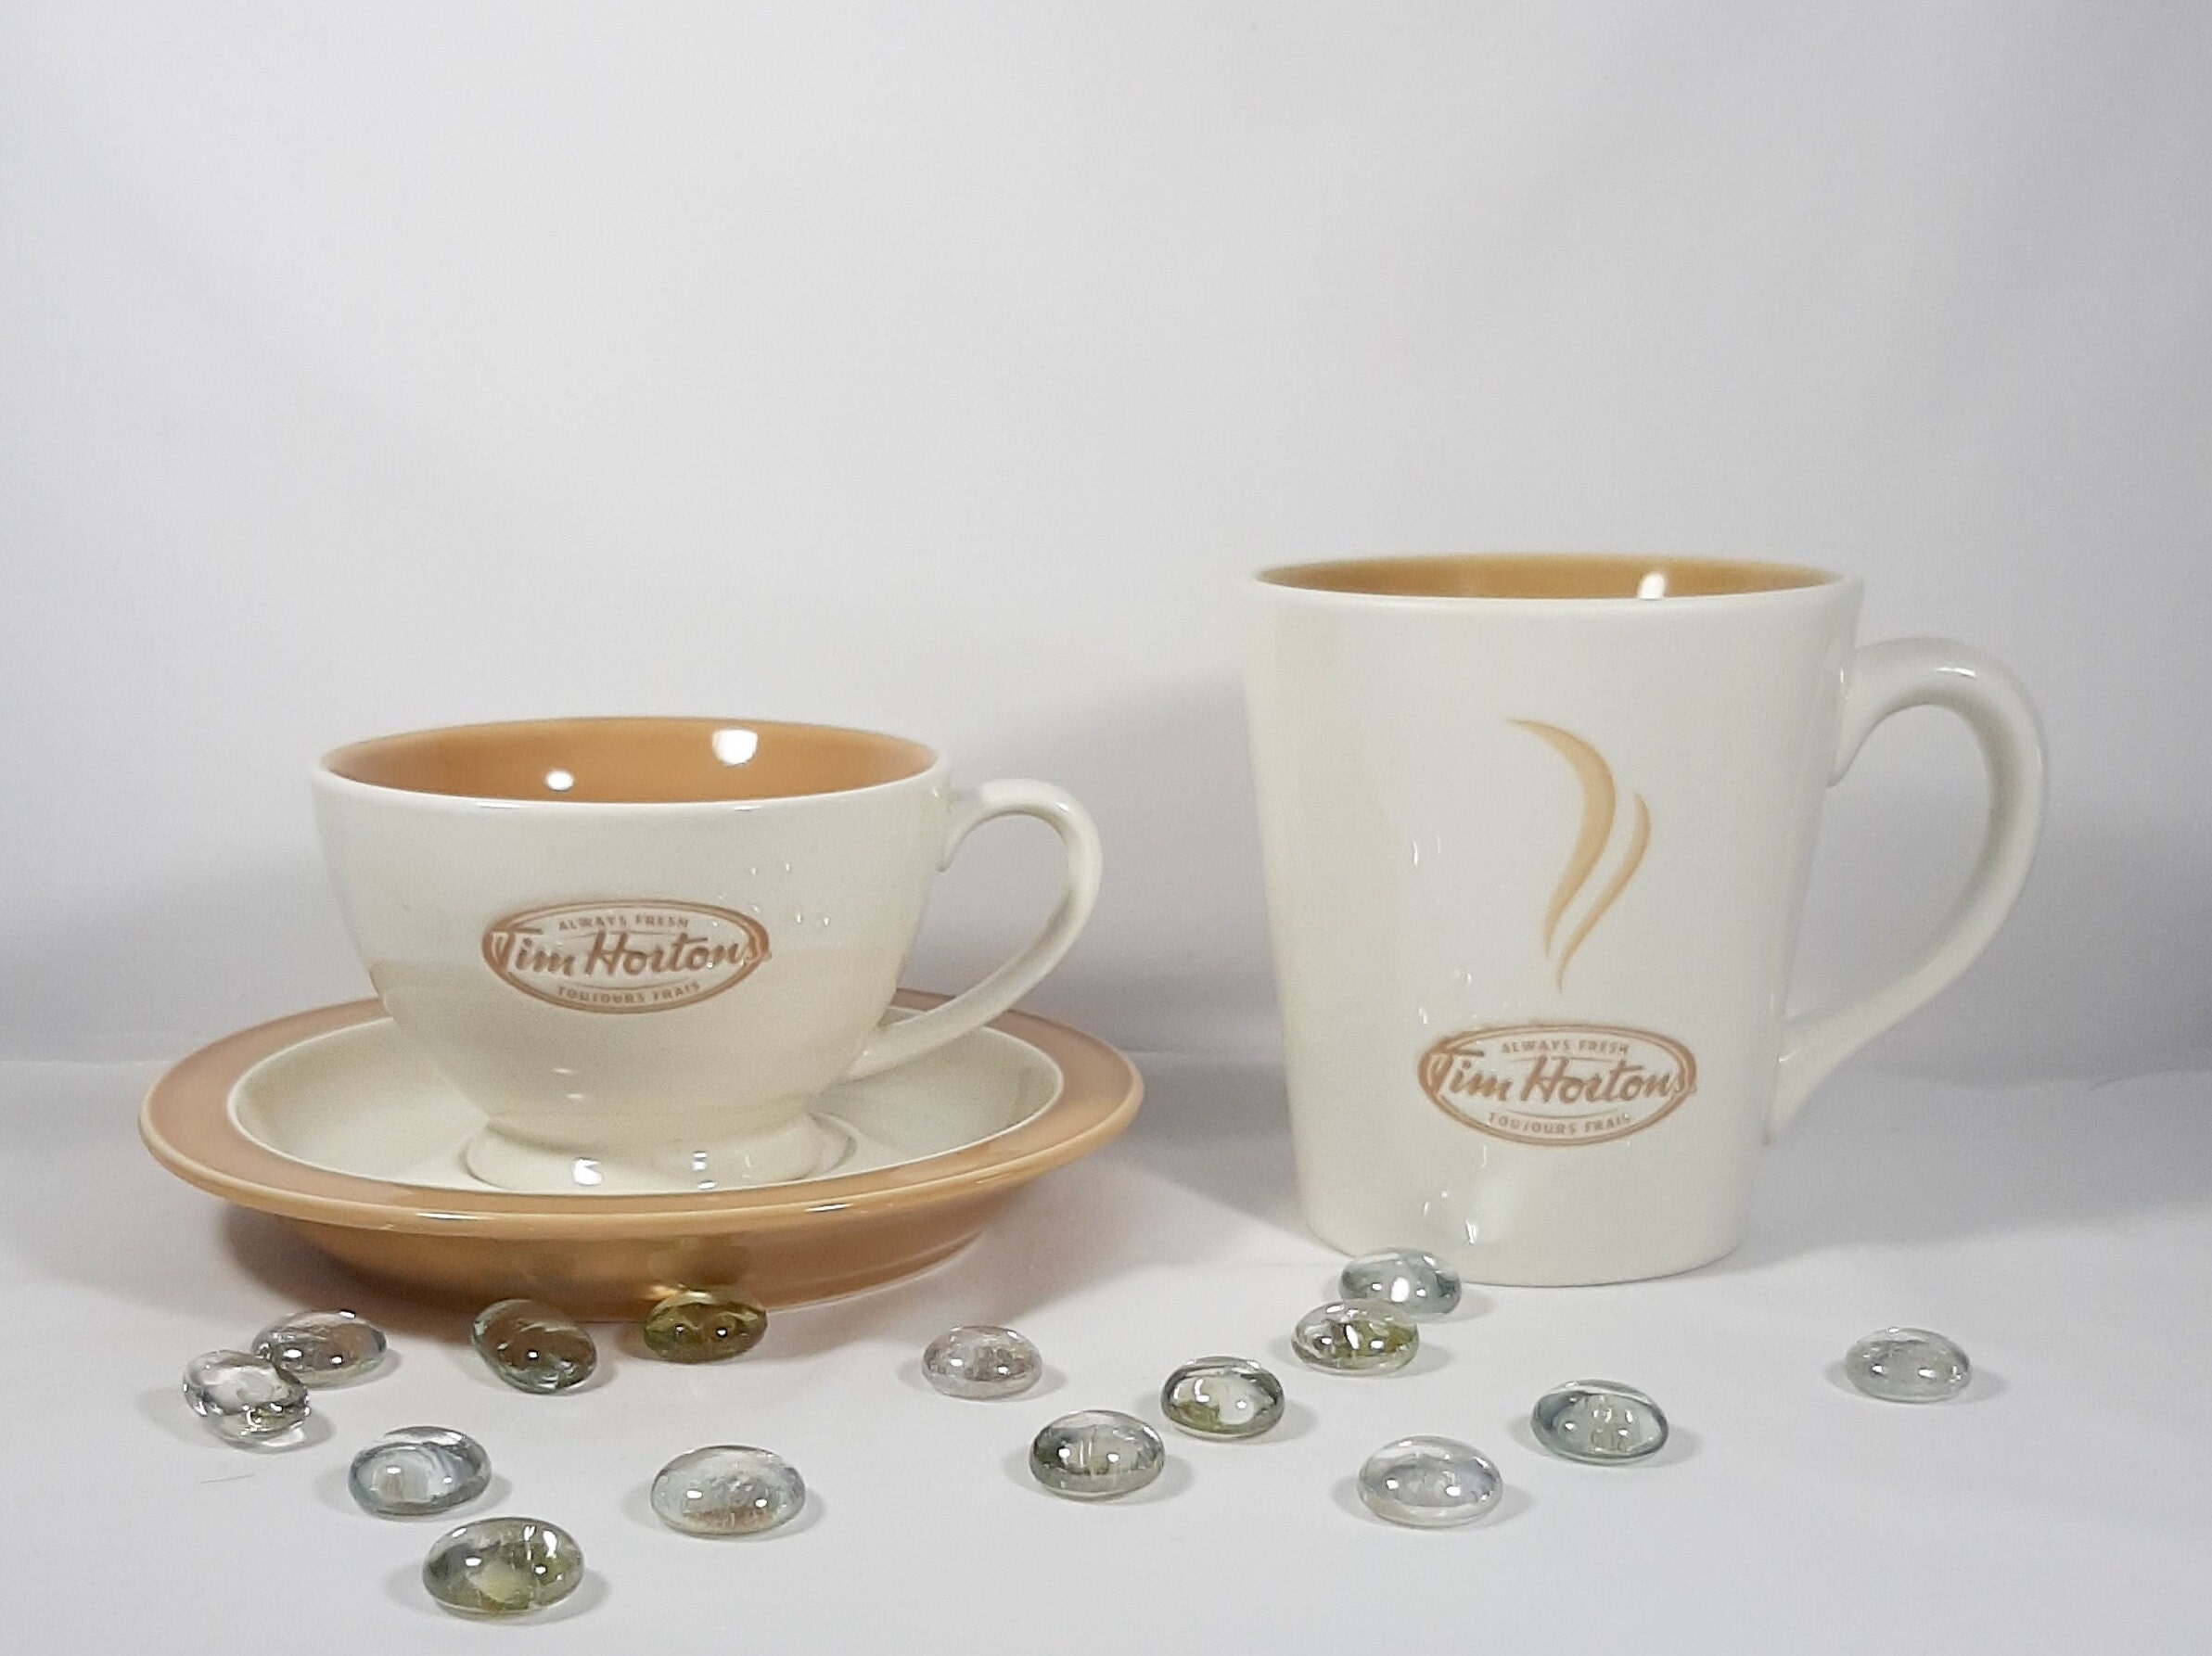 Tim Hortons Tea Cup Or Coffee Mug Vintage Collectible Tea Etsy